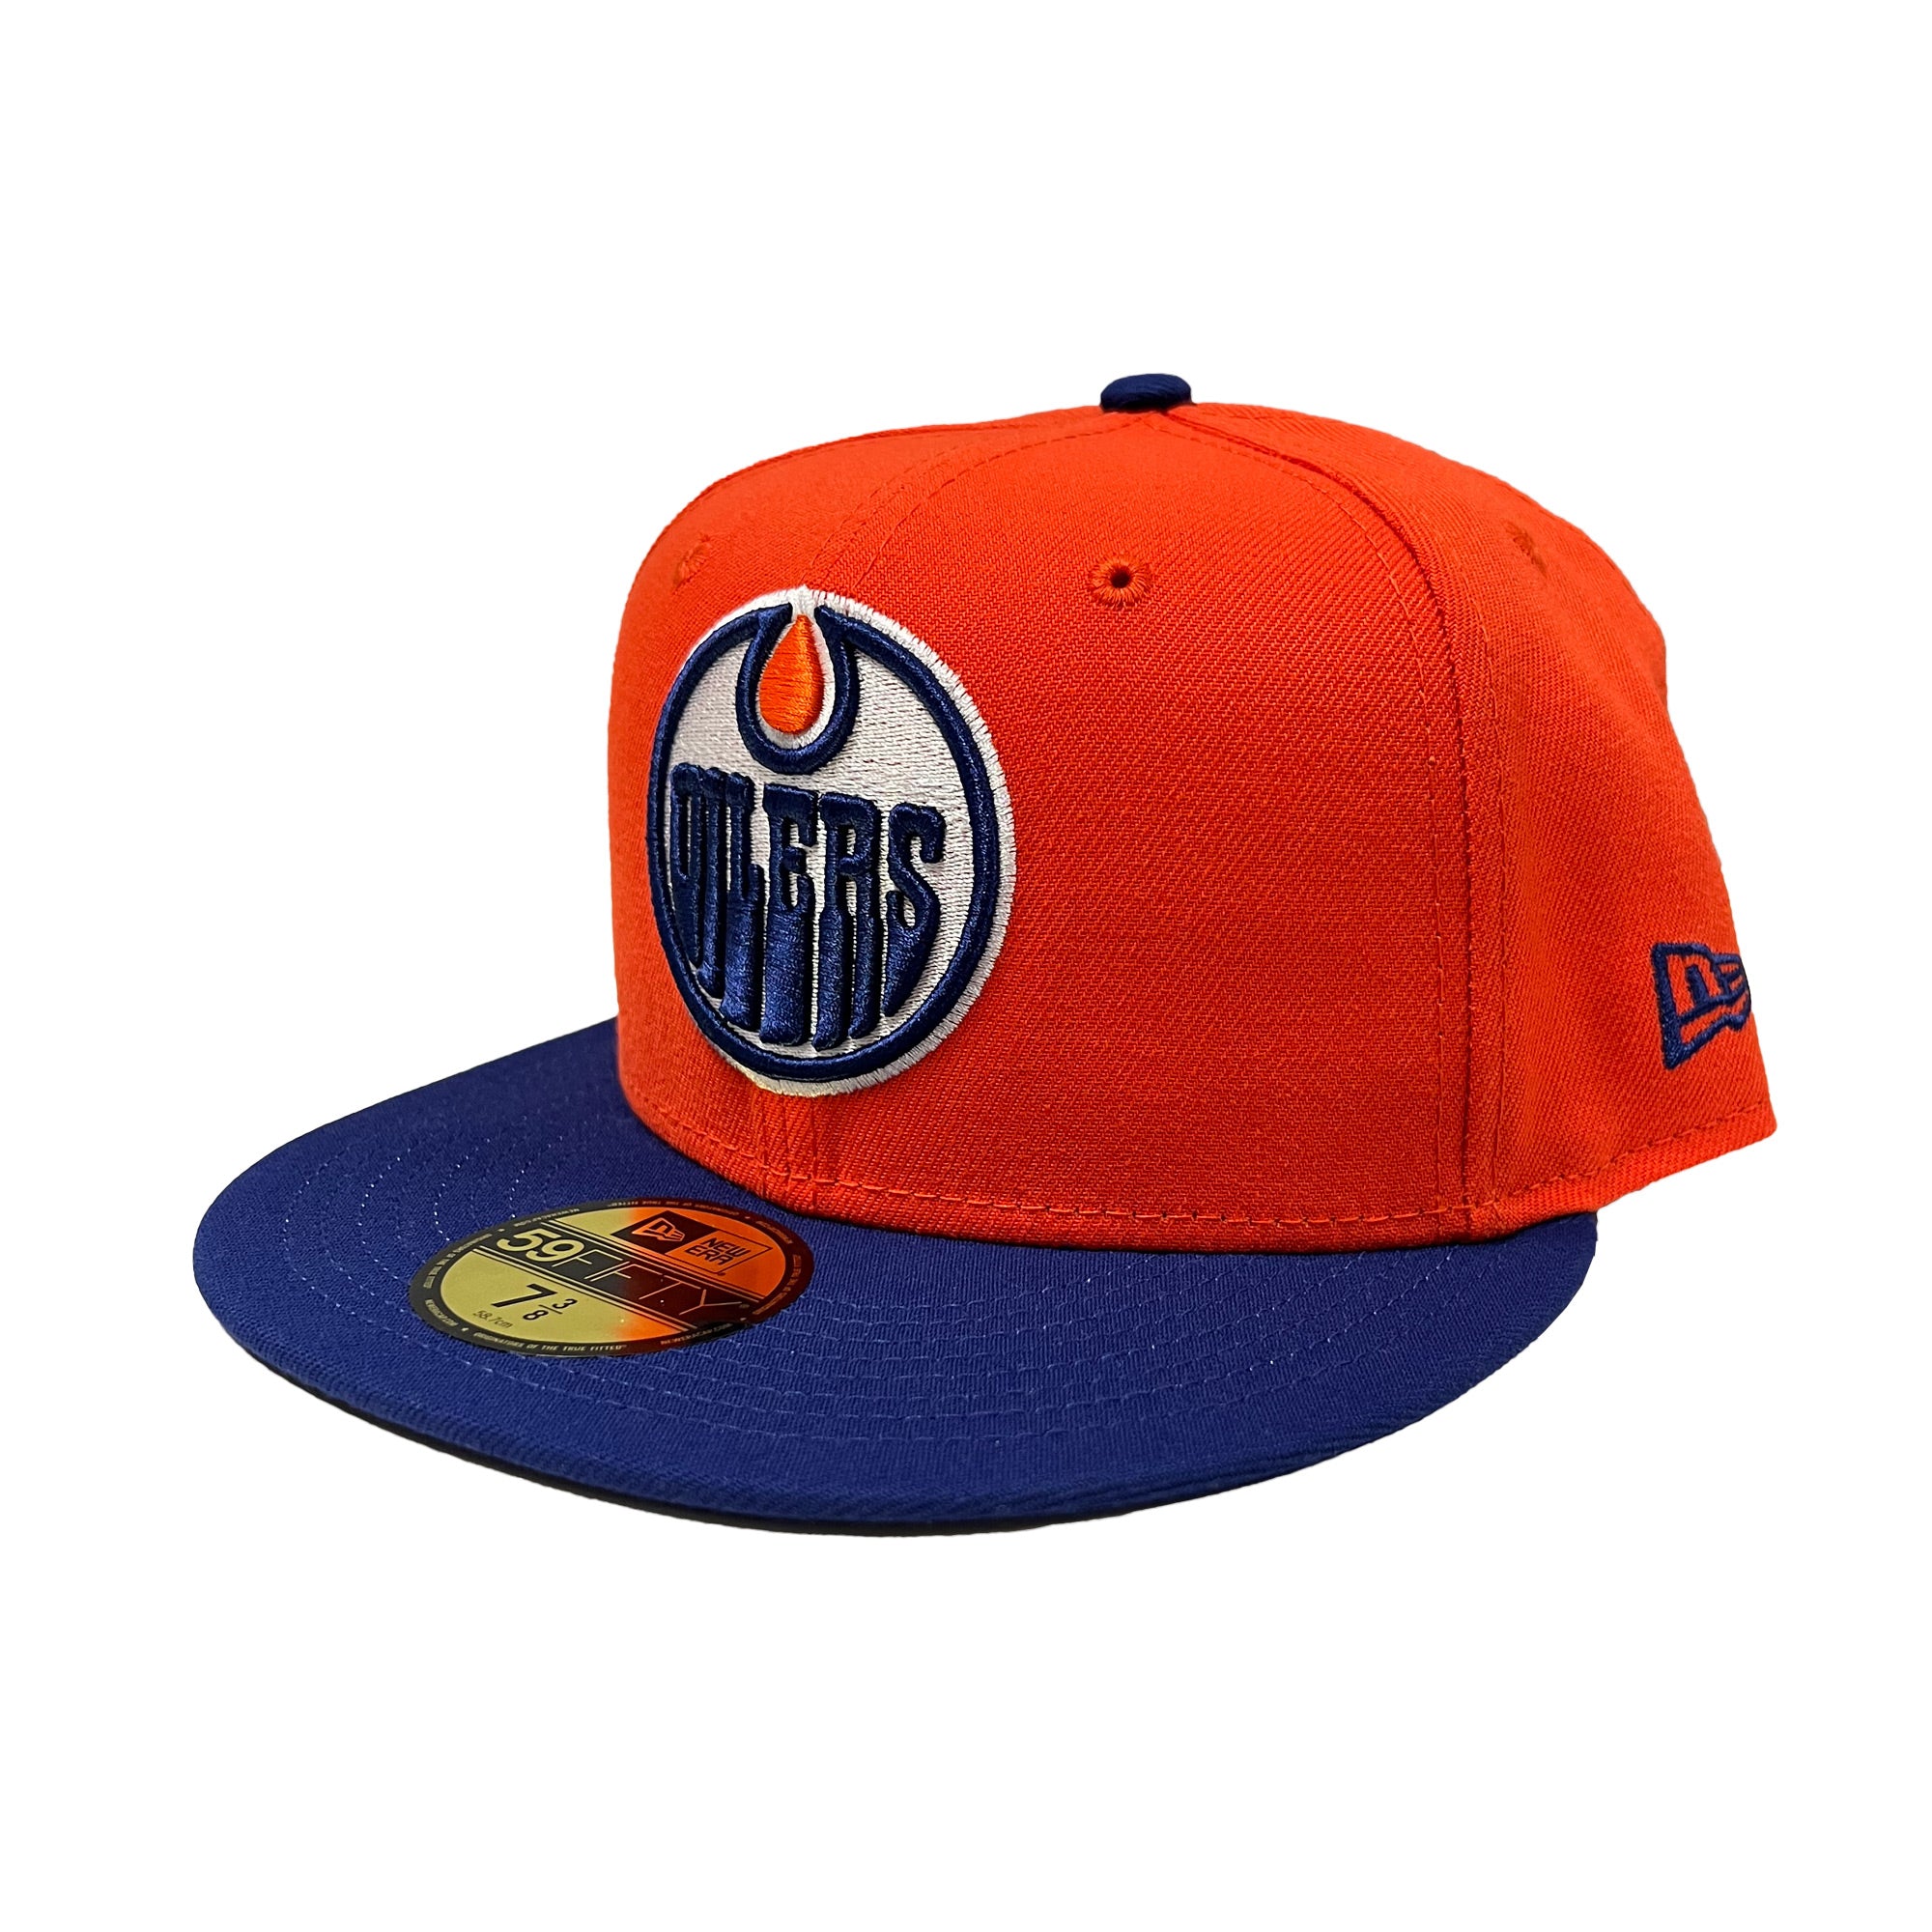 Cap New Era Edmonton Oilers Royal Blue_01